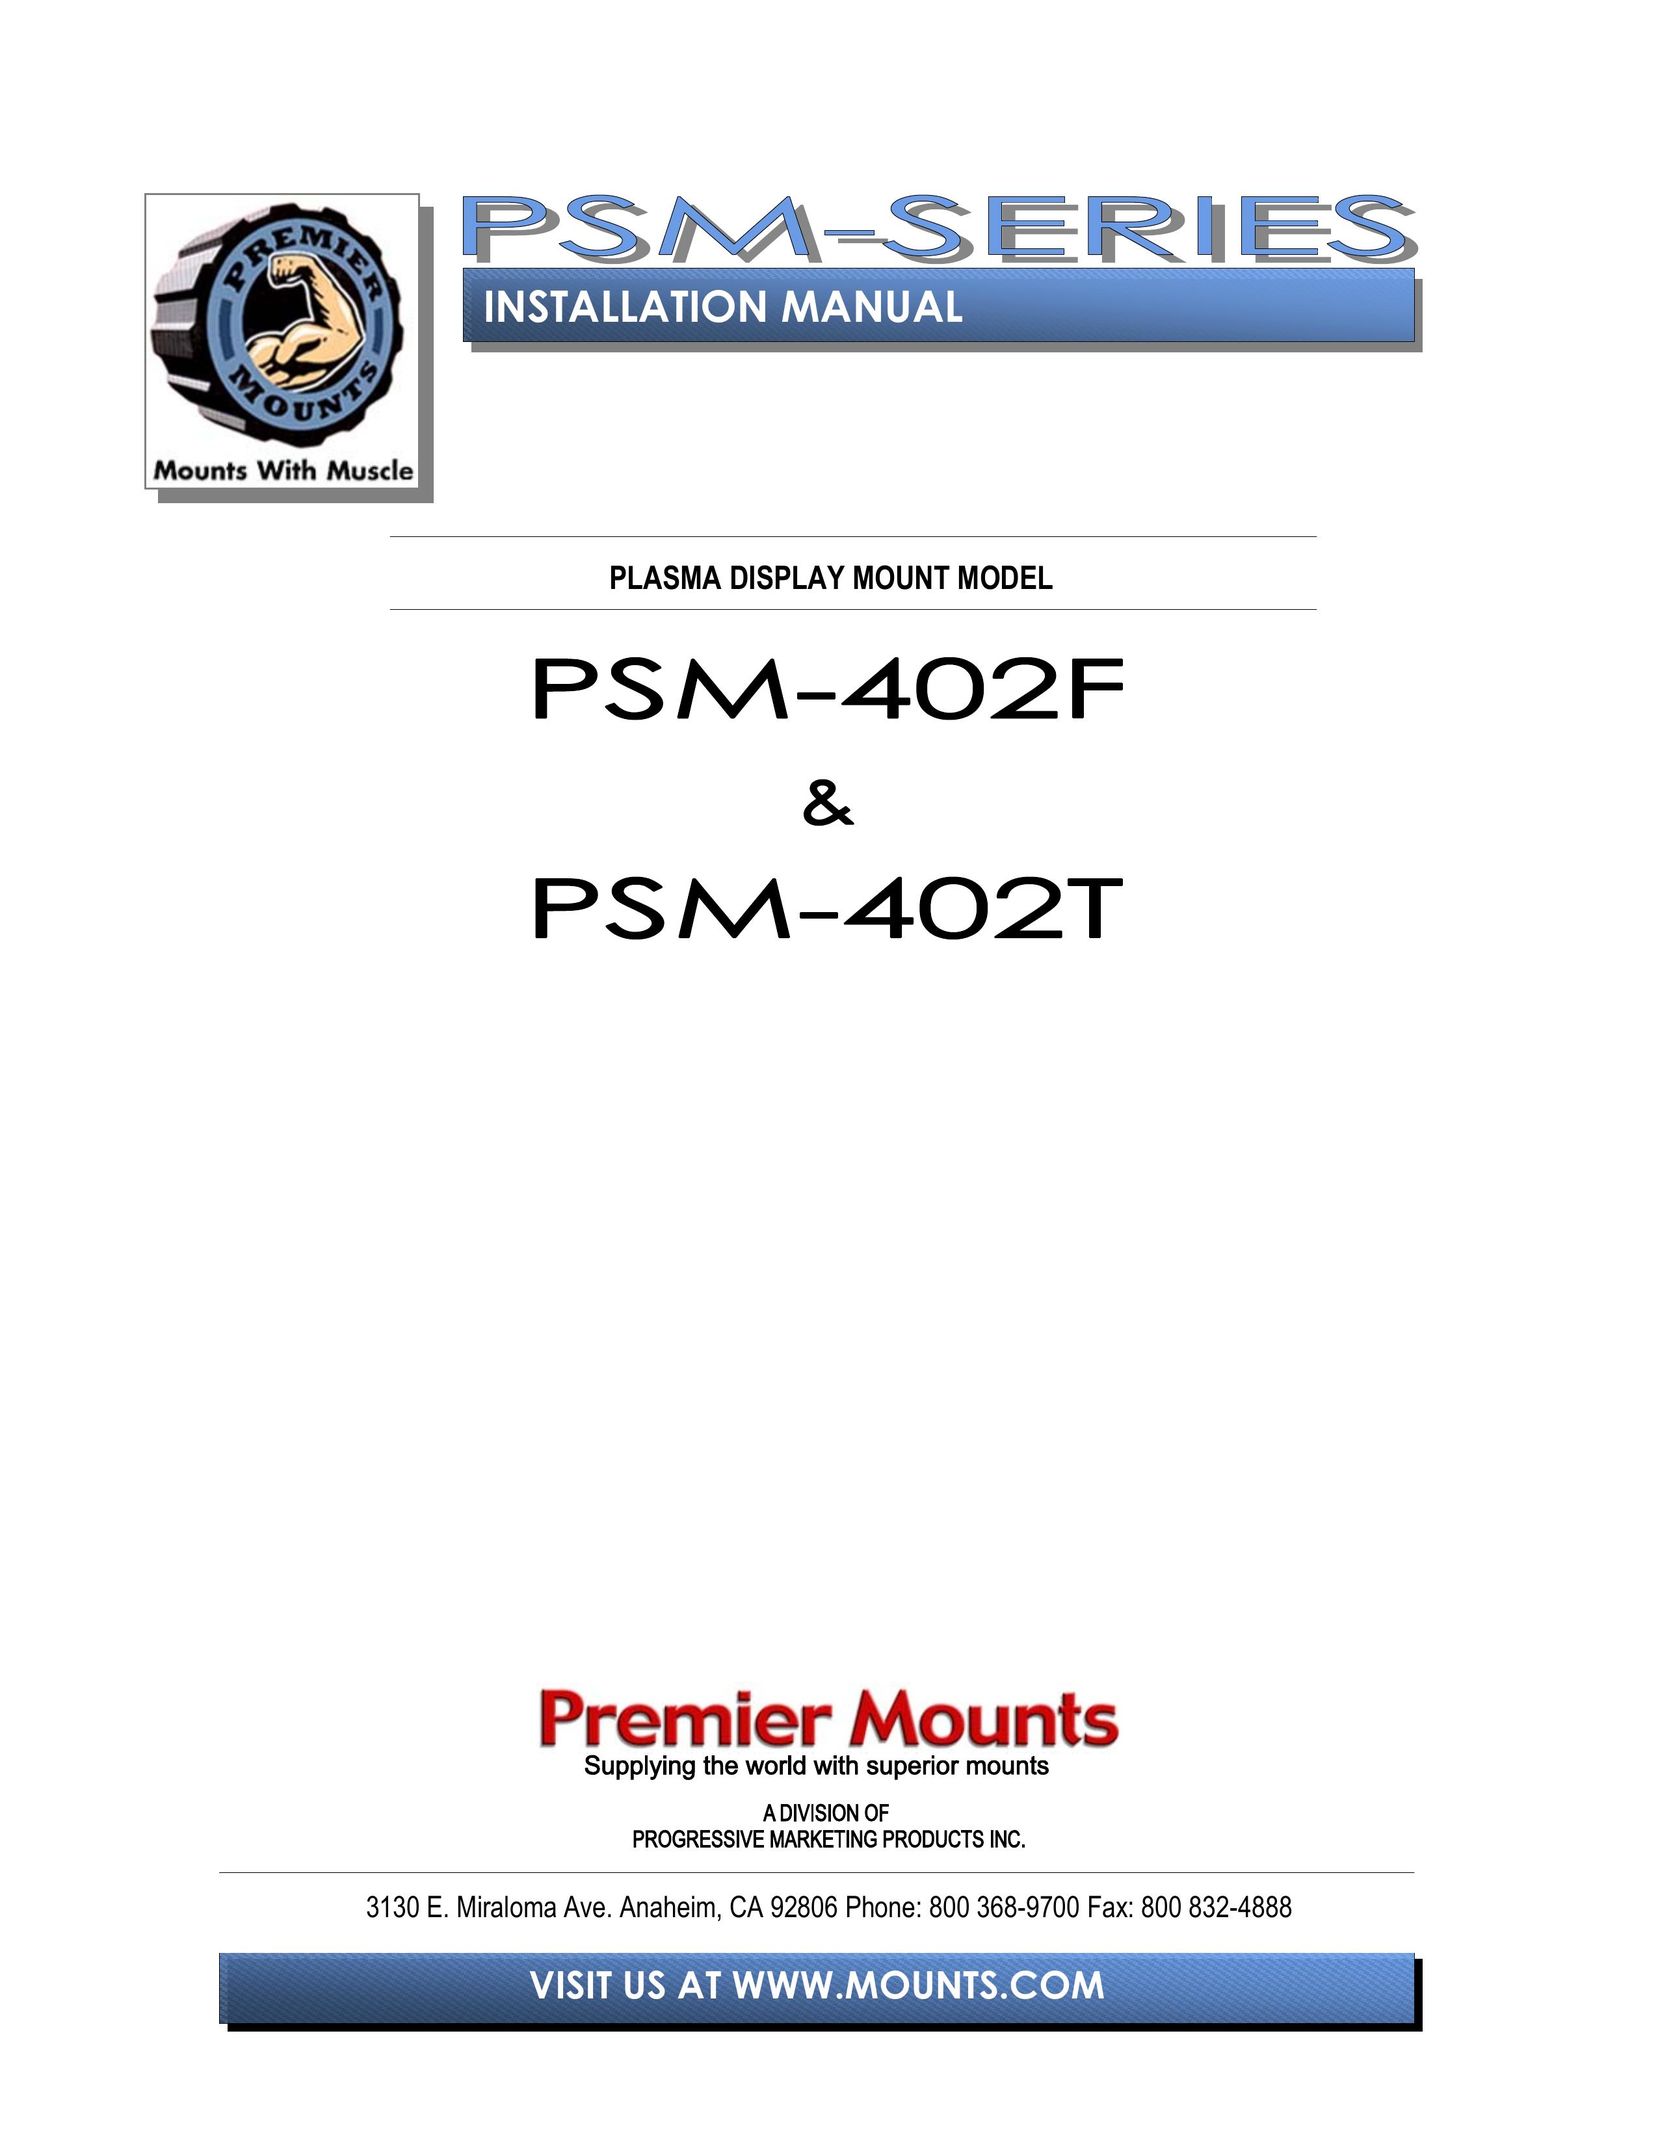 Premier Mounts PSM-402T TV Mount User Manual